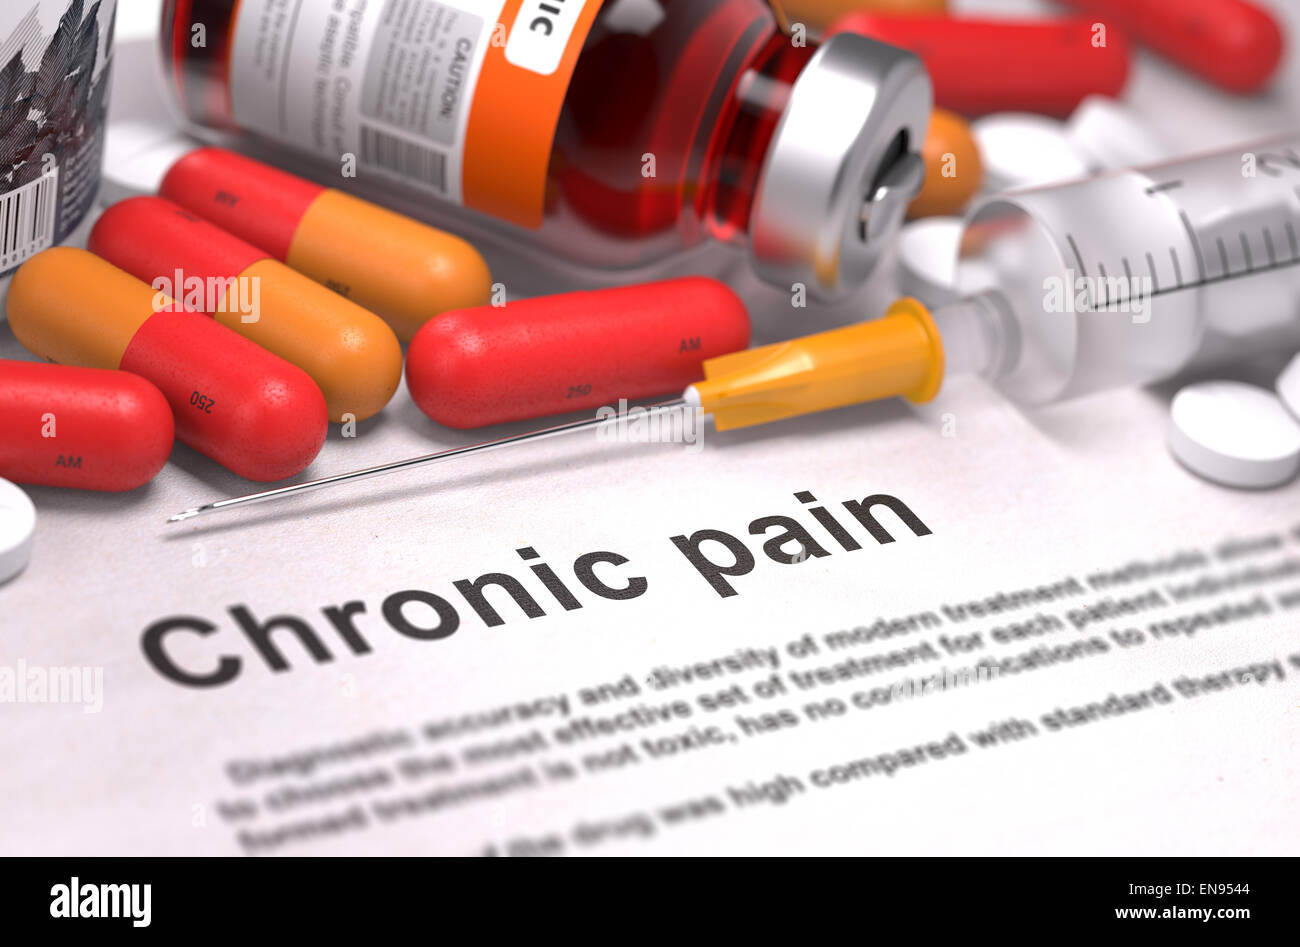 Chronic Pain - Medical Concept. Stock Photo